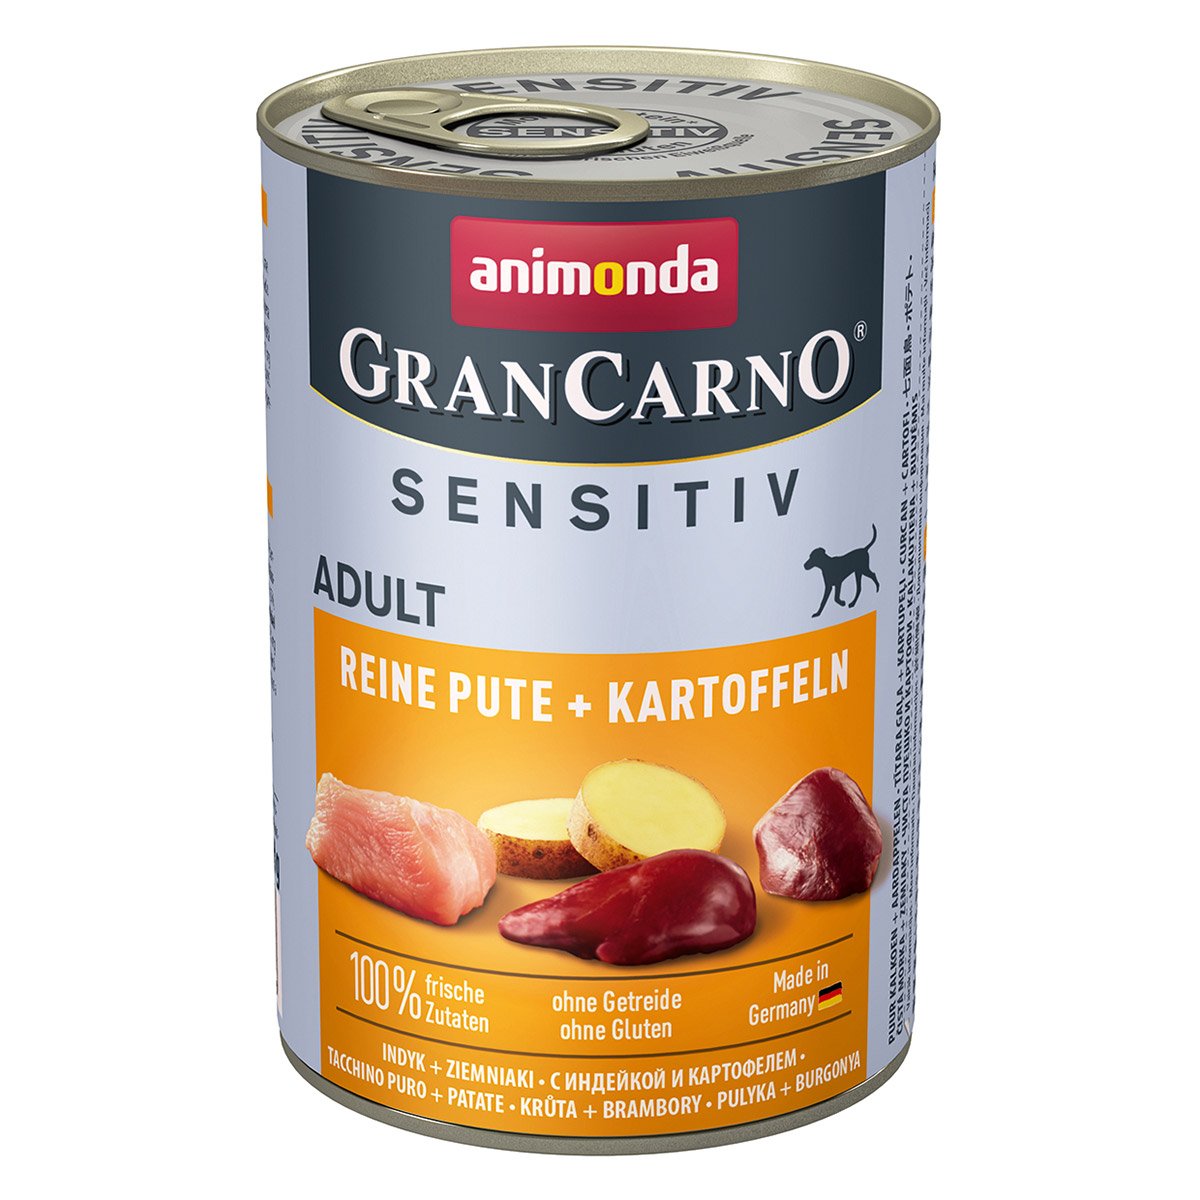 animonda GranCarno Sensitiv Pute und Kartoffel 24x400g